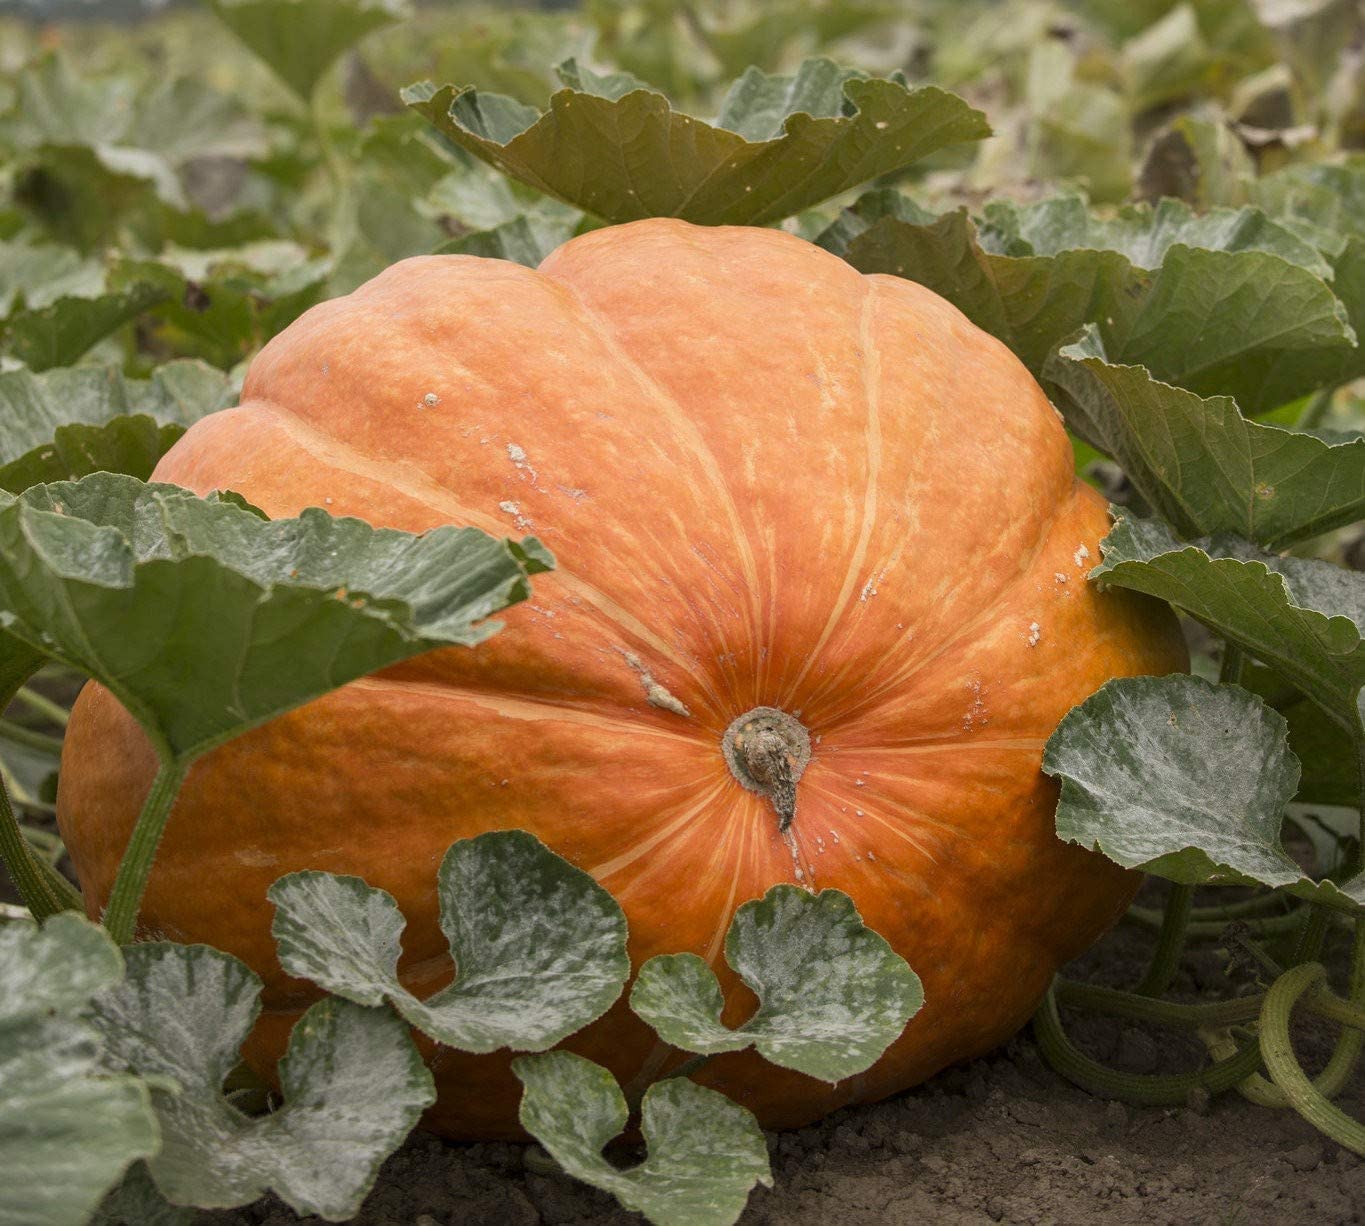 Atlantic Giant Pumpkin, 15 Heirloom Seeds Per Packet, Non GMO Seeds